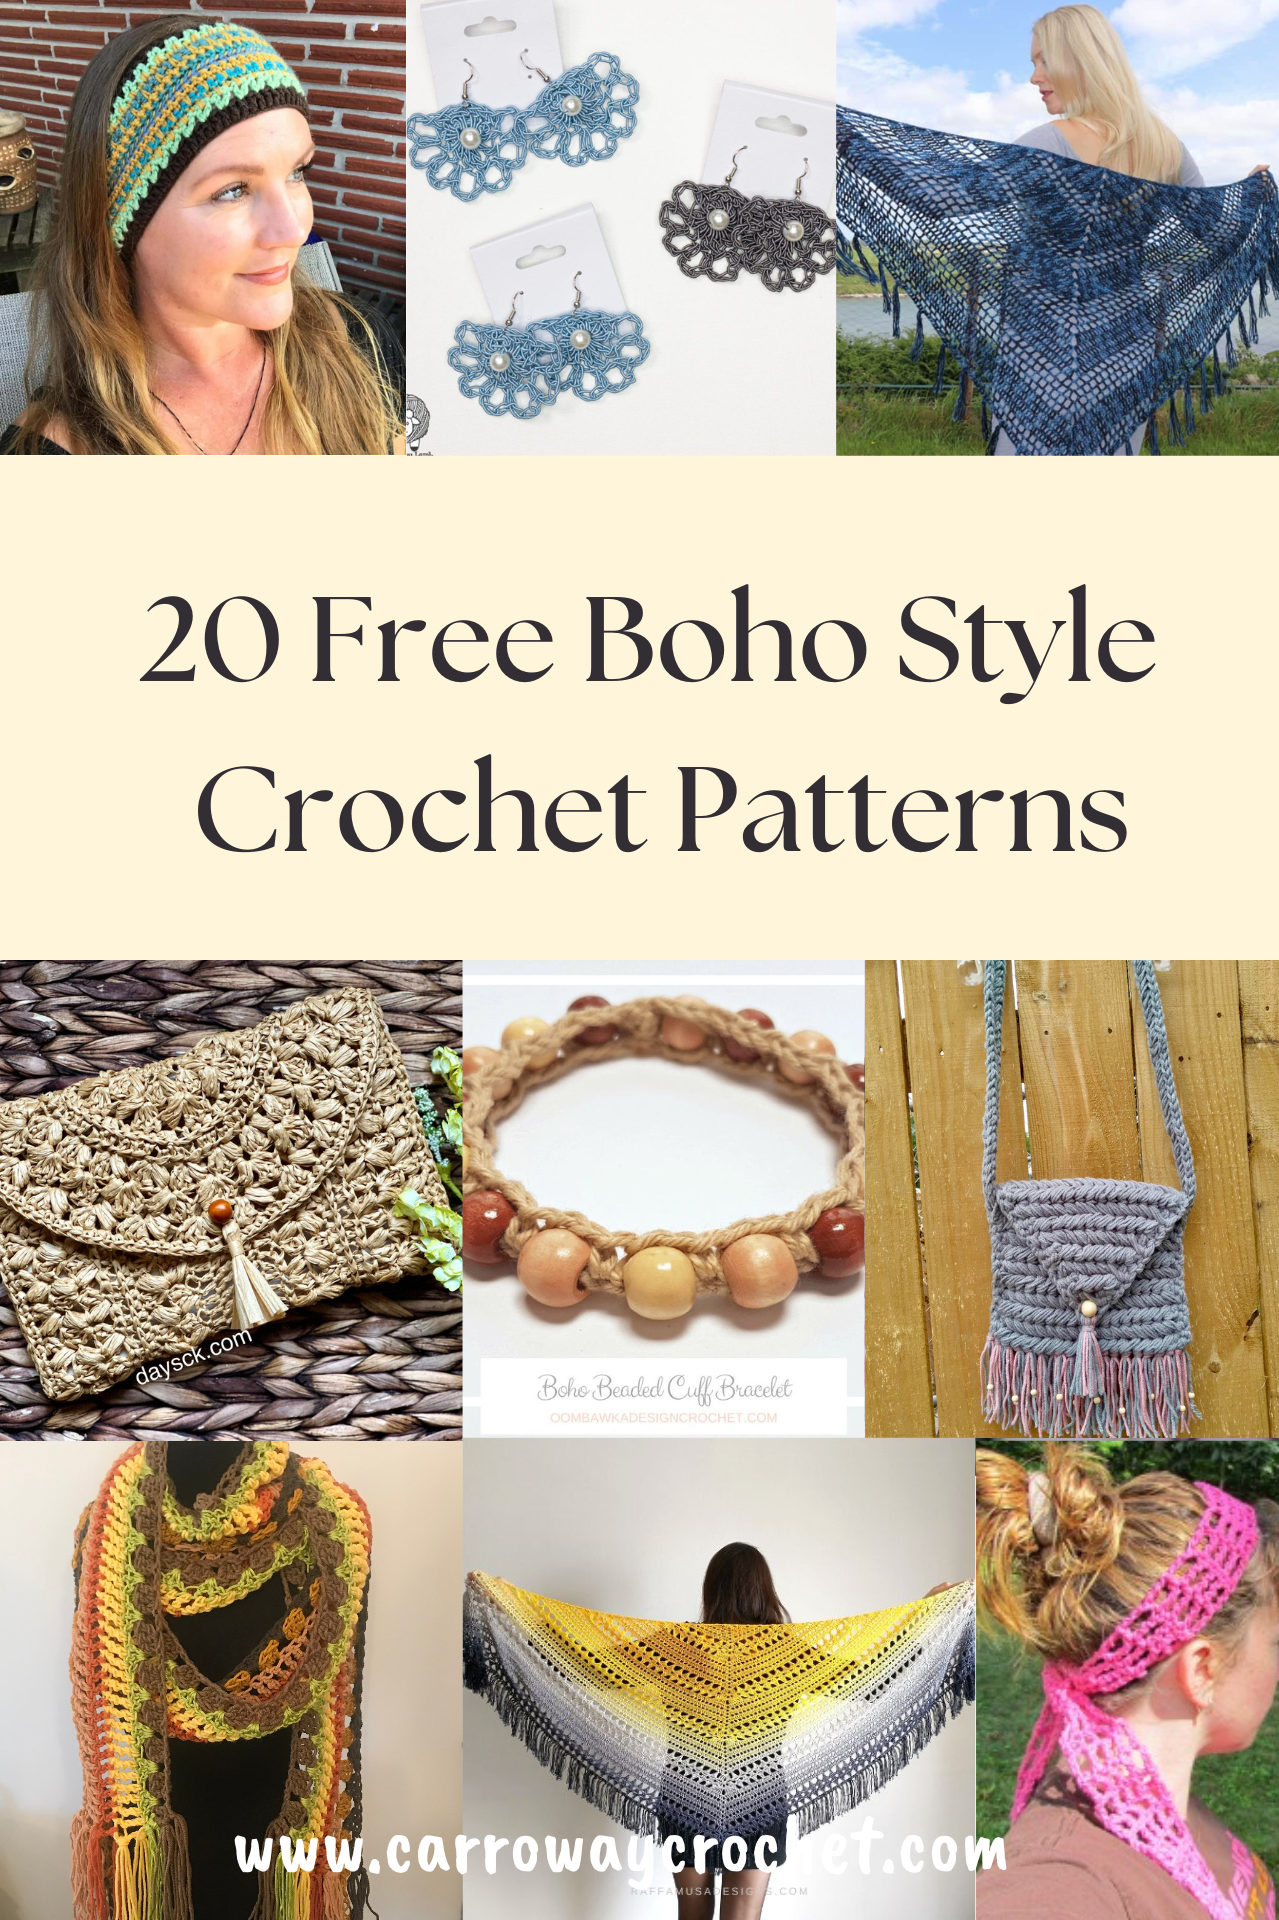 Trend Alert: 10 Two Piece Crochet Set Patterns - I Can Crochet That